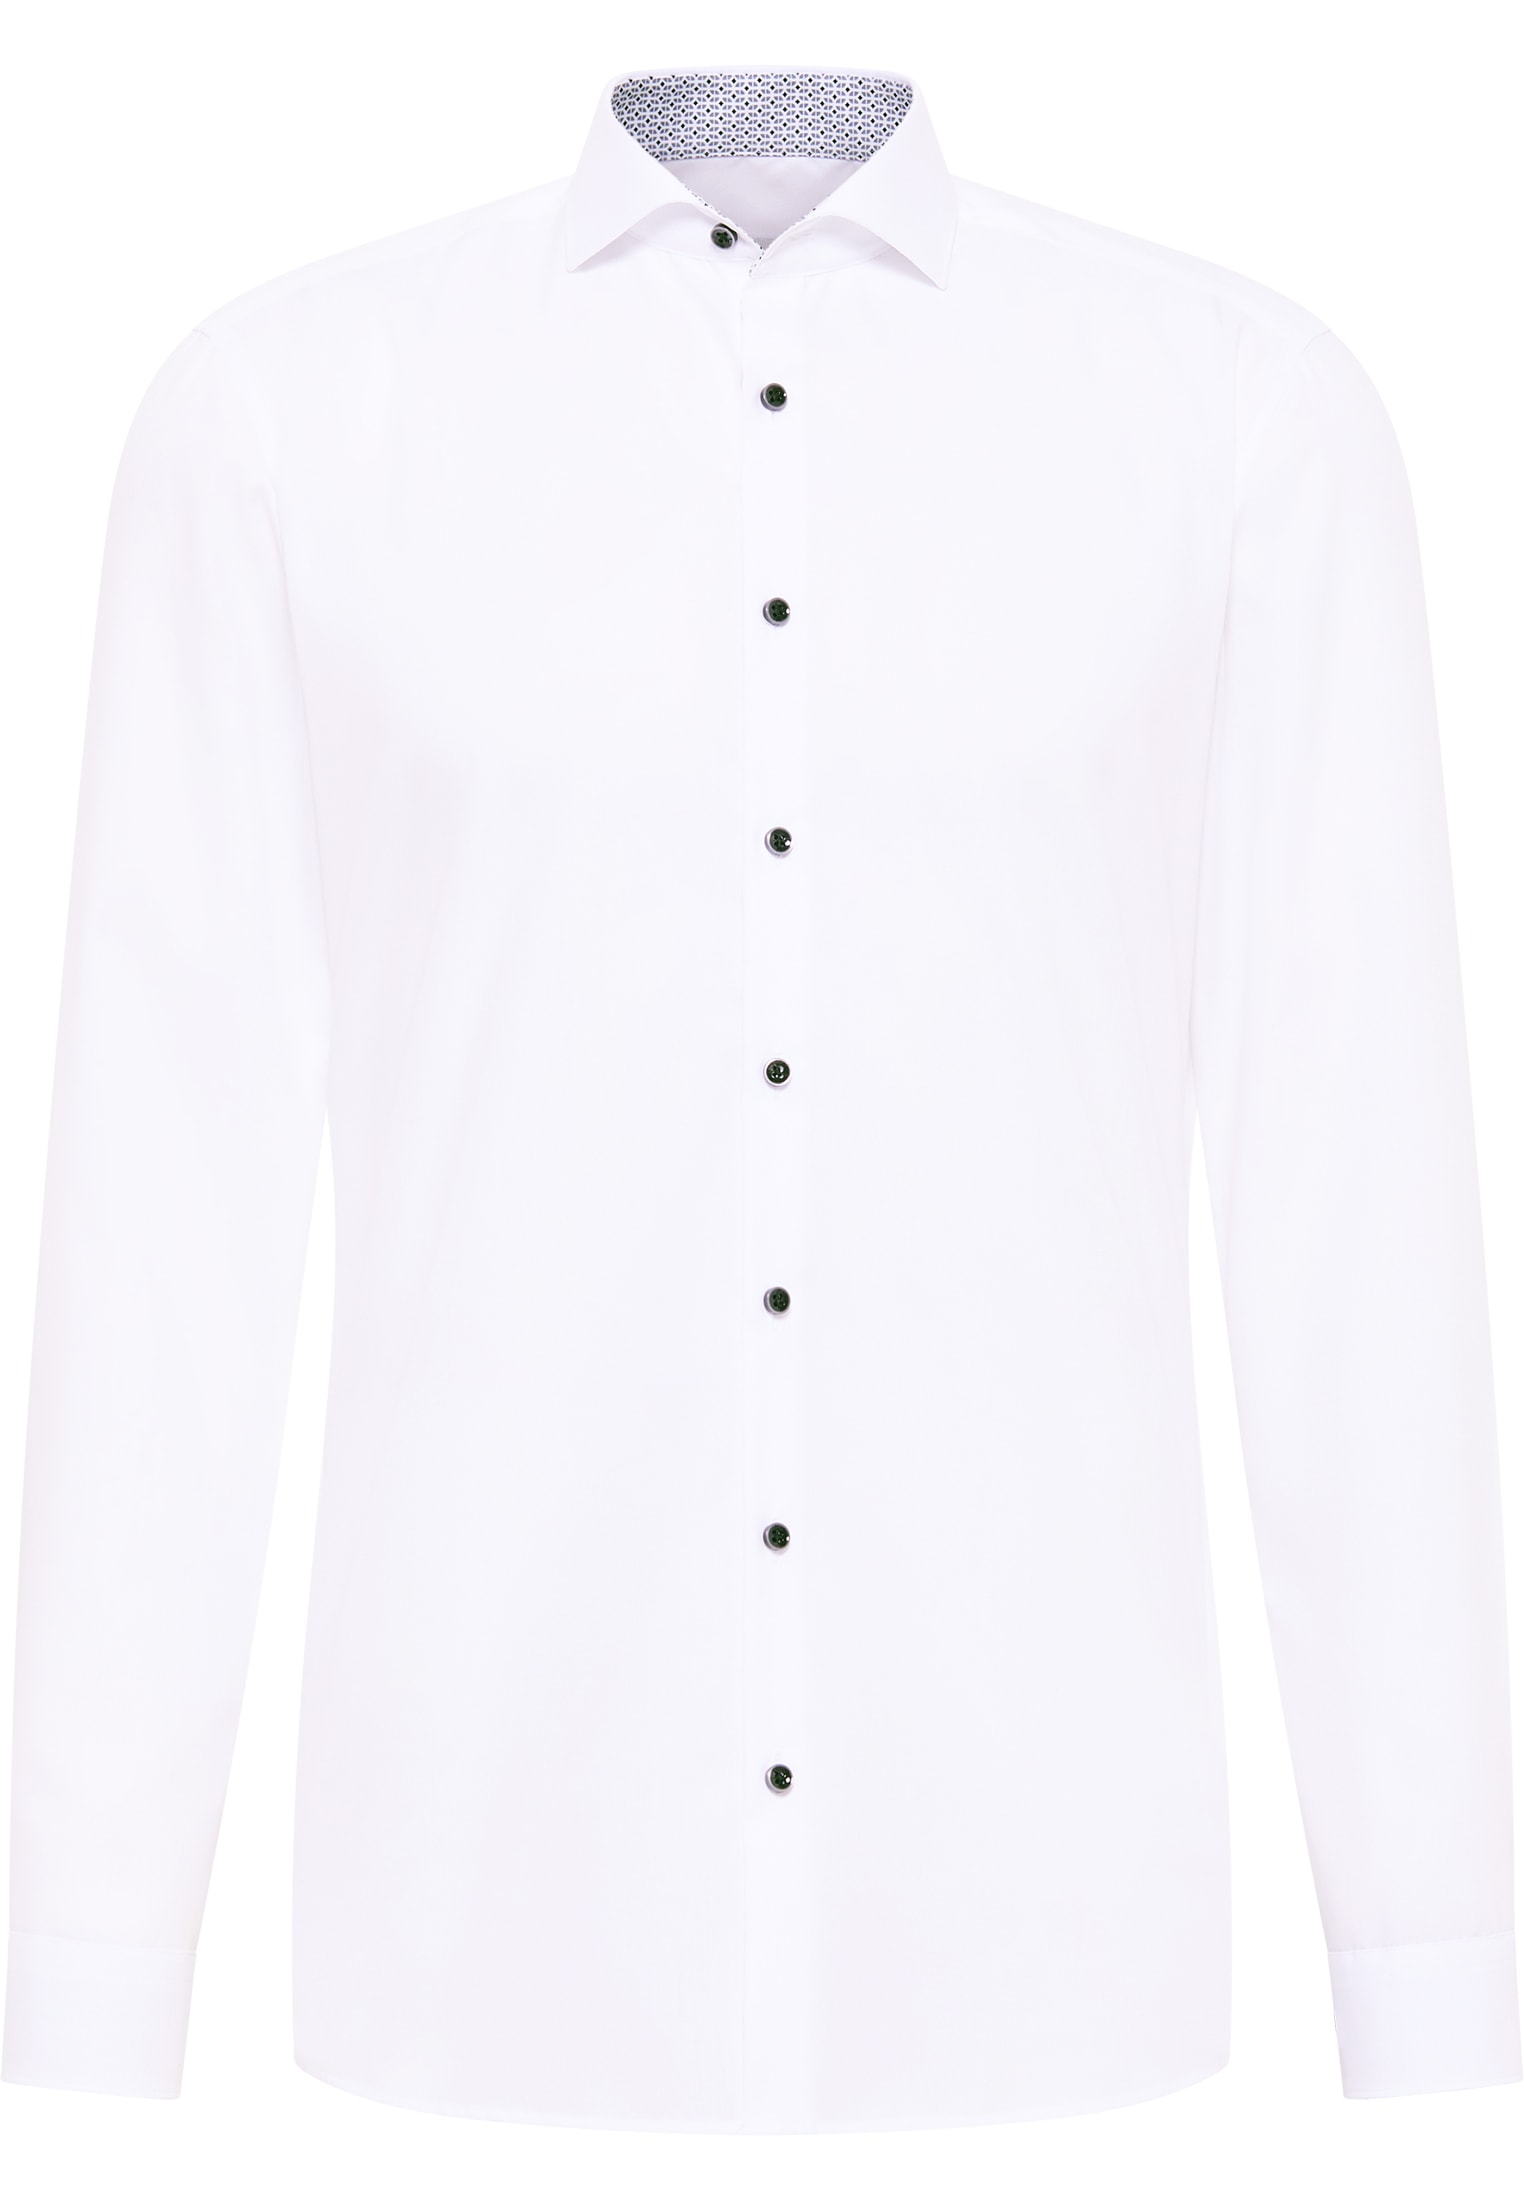 SUPER SLIM Original Shirt in weiß unifarben